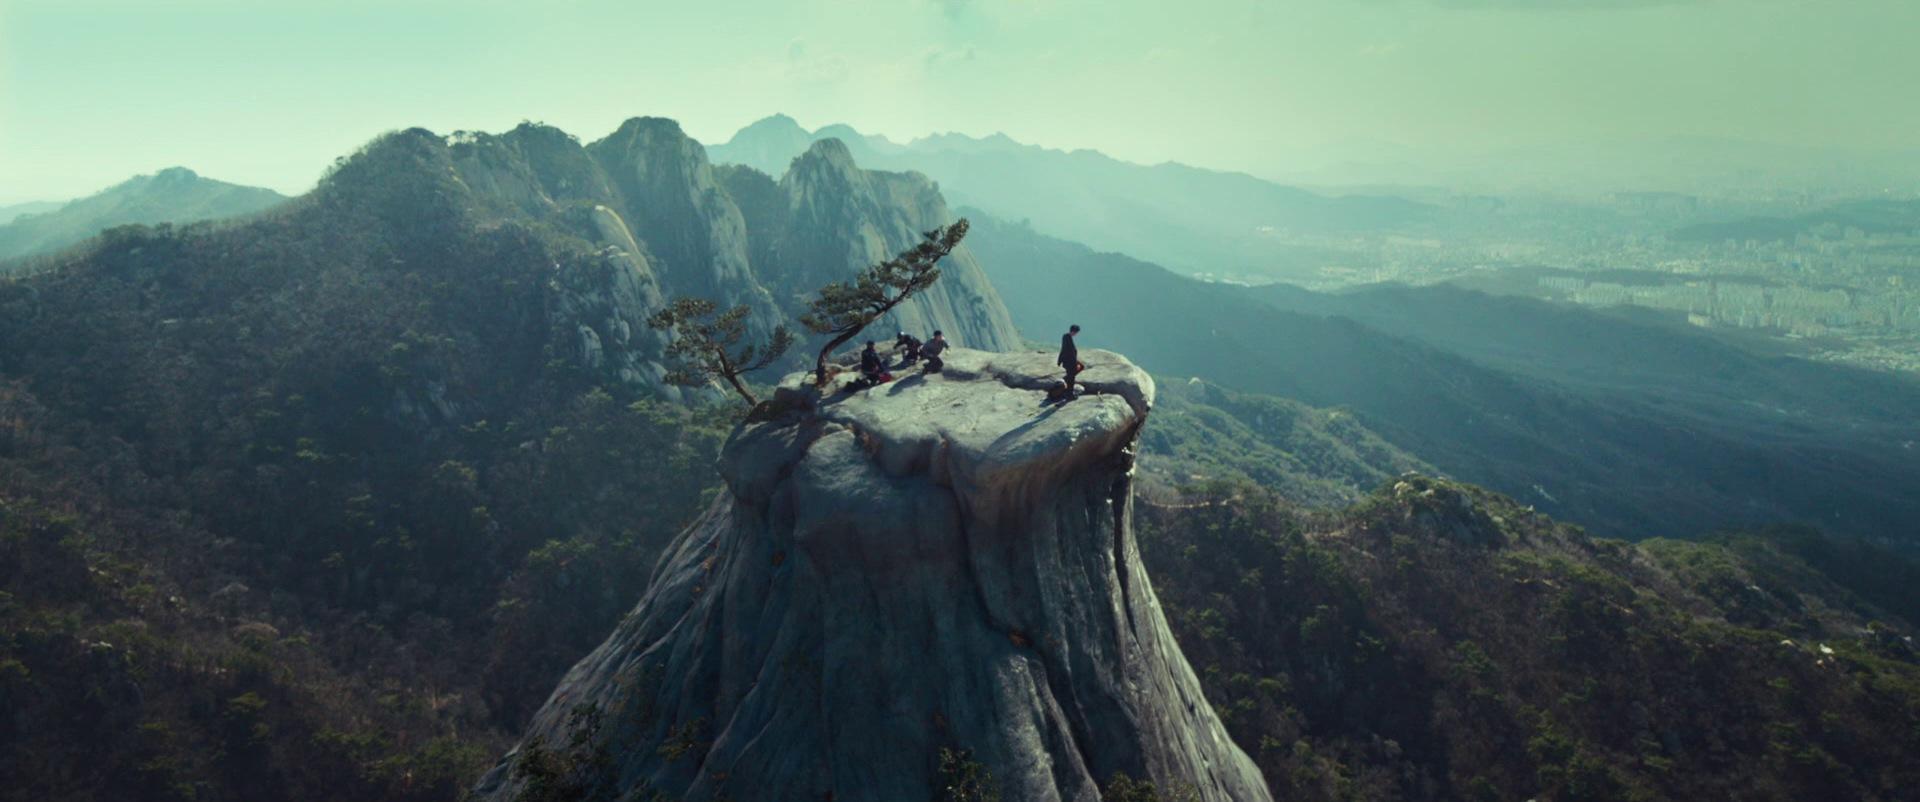 Men stand atop a large, pillar-like mountain.